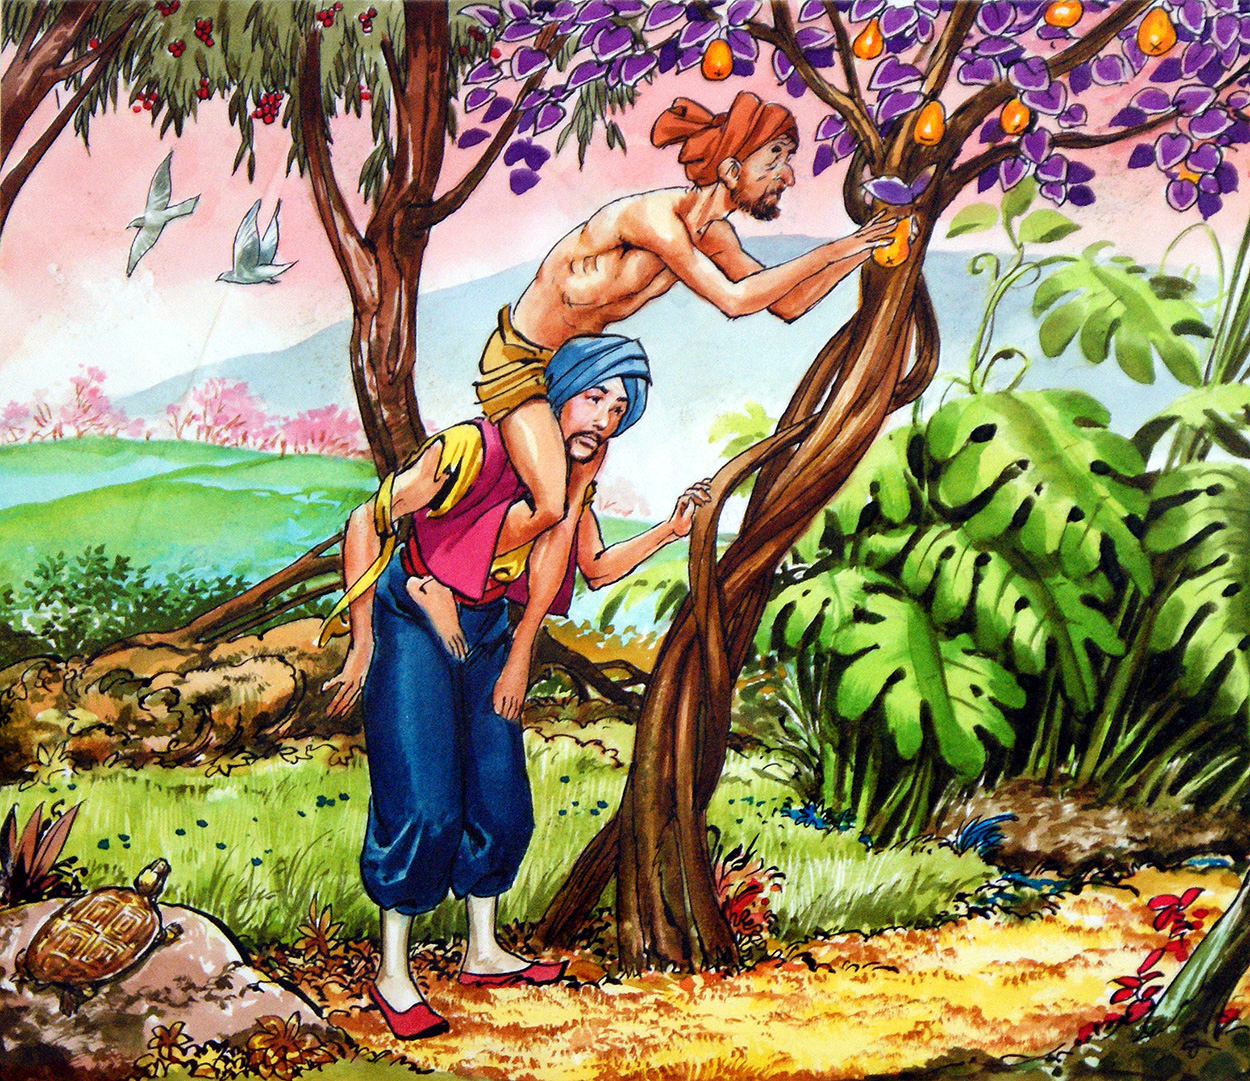 Picking Fruit (Original) art by Sinbad the Sailor (Nadir Quinto) at The Illustration Art Gallery